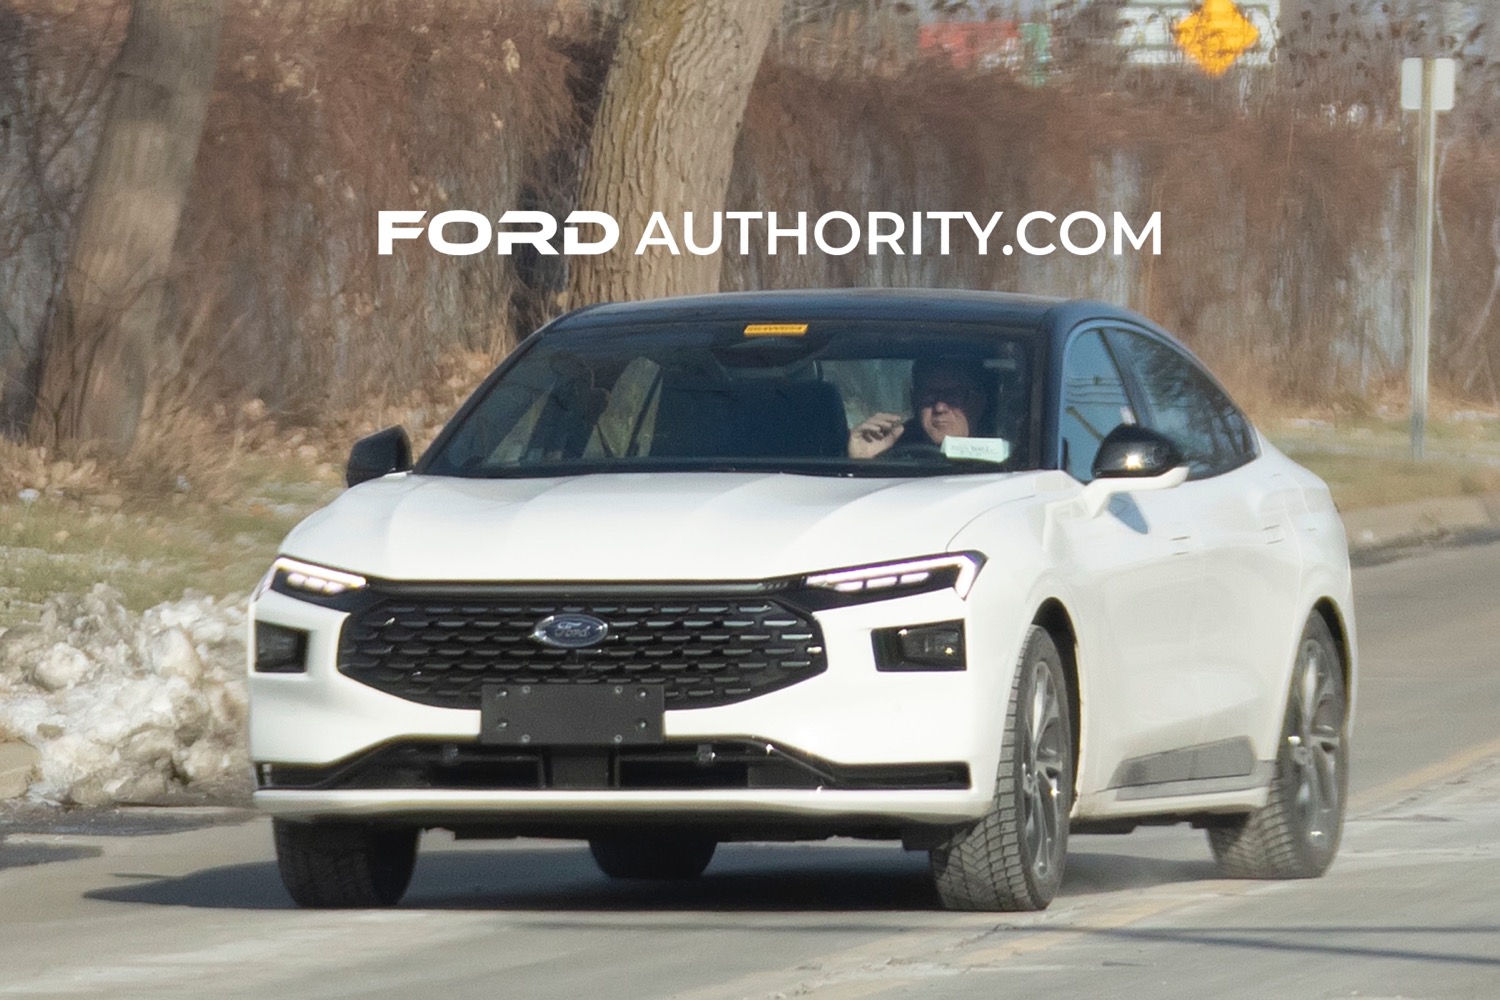 2023 Ford Fusion / Mondeo Sedan Caught Undisguised In Michigan